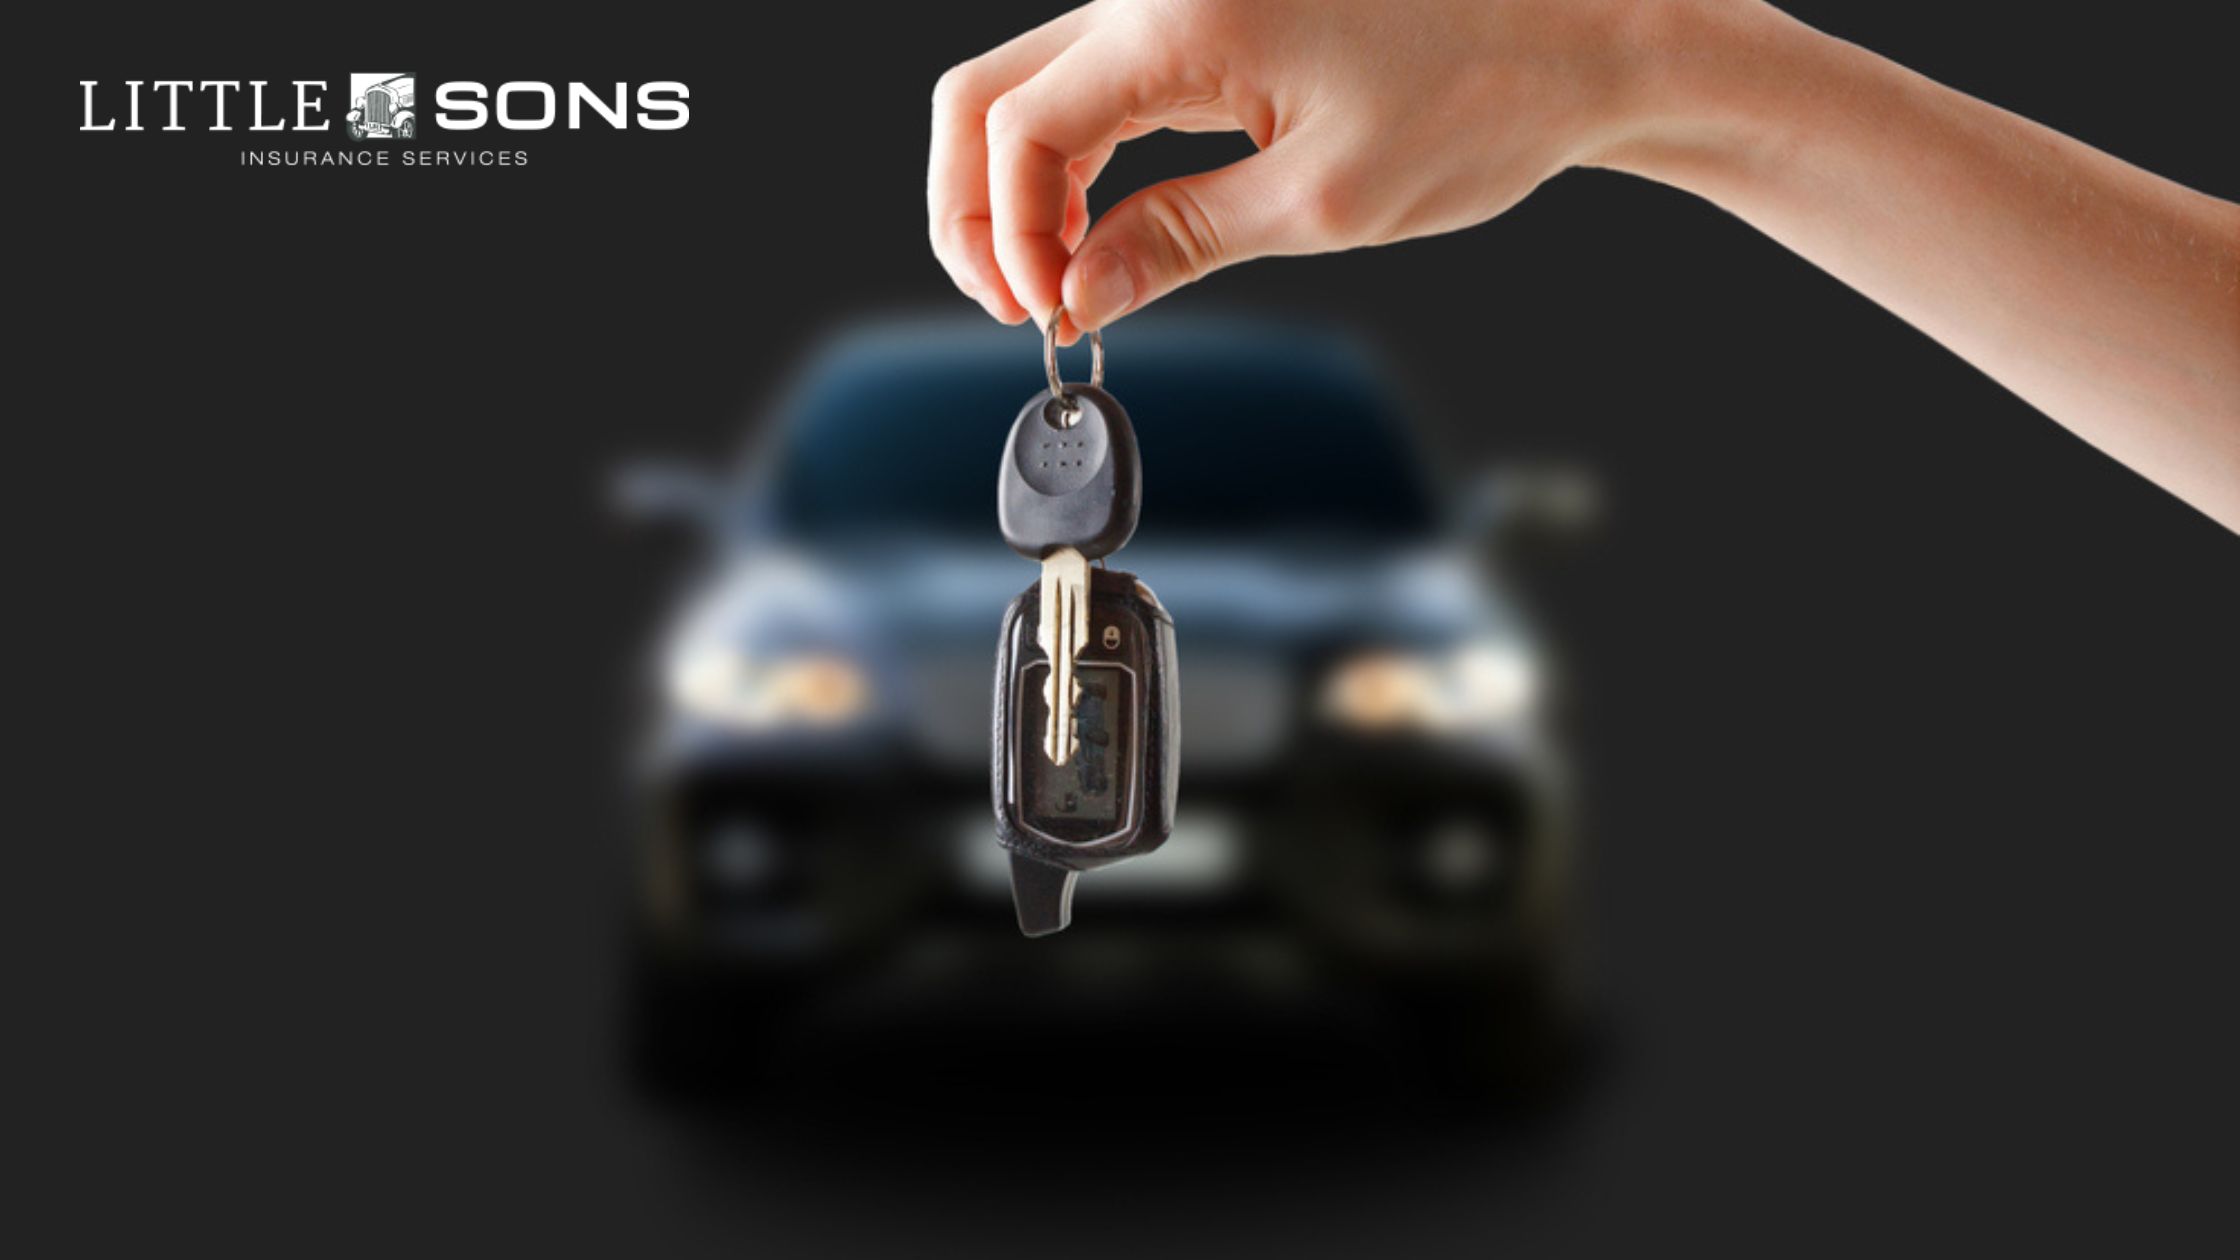 Does Car Insurance Cover Stolen or Damaged Keys?